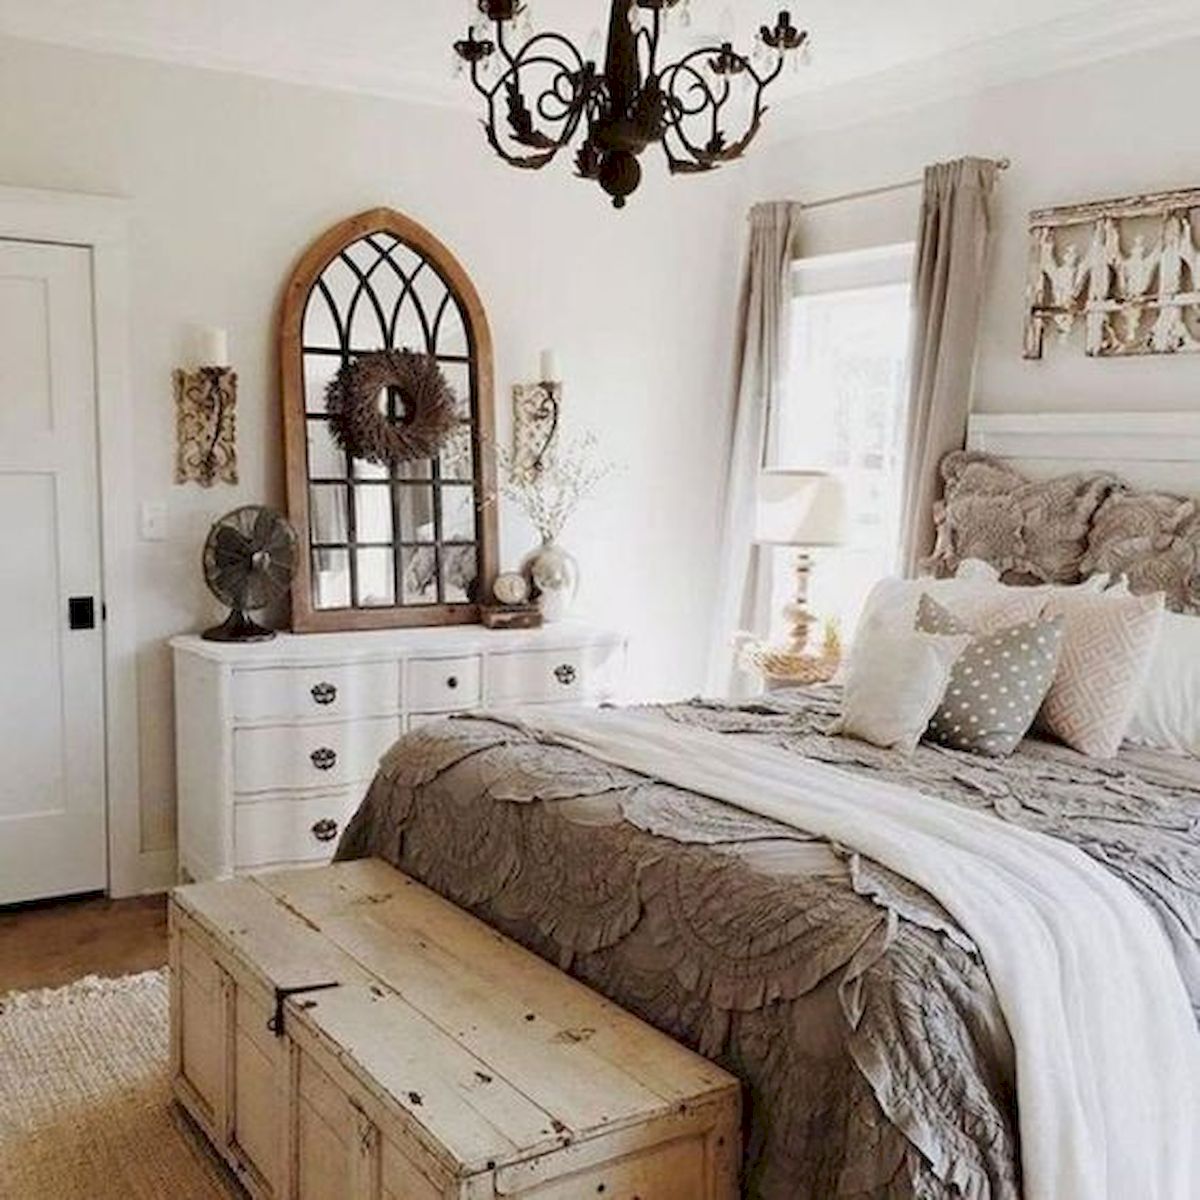 60 Beautiful Bedroom Decor And Design Ideas (59)